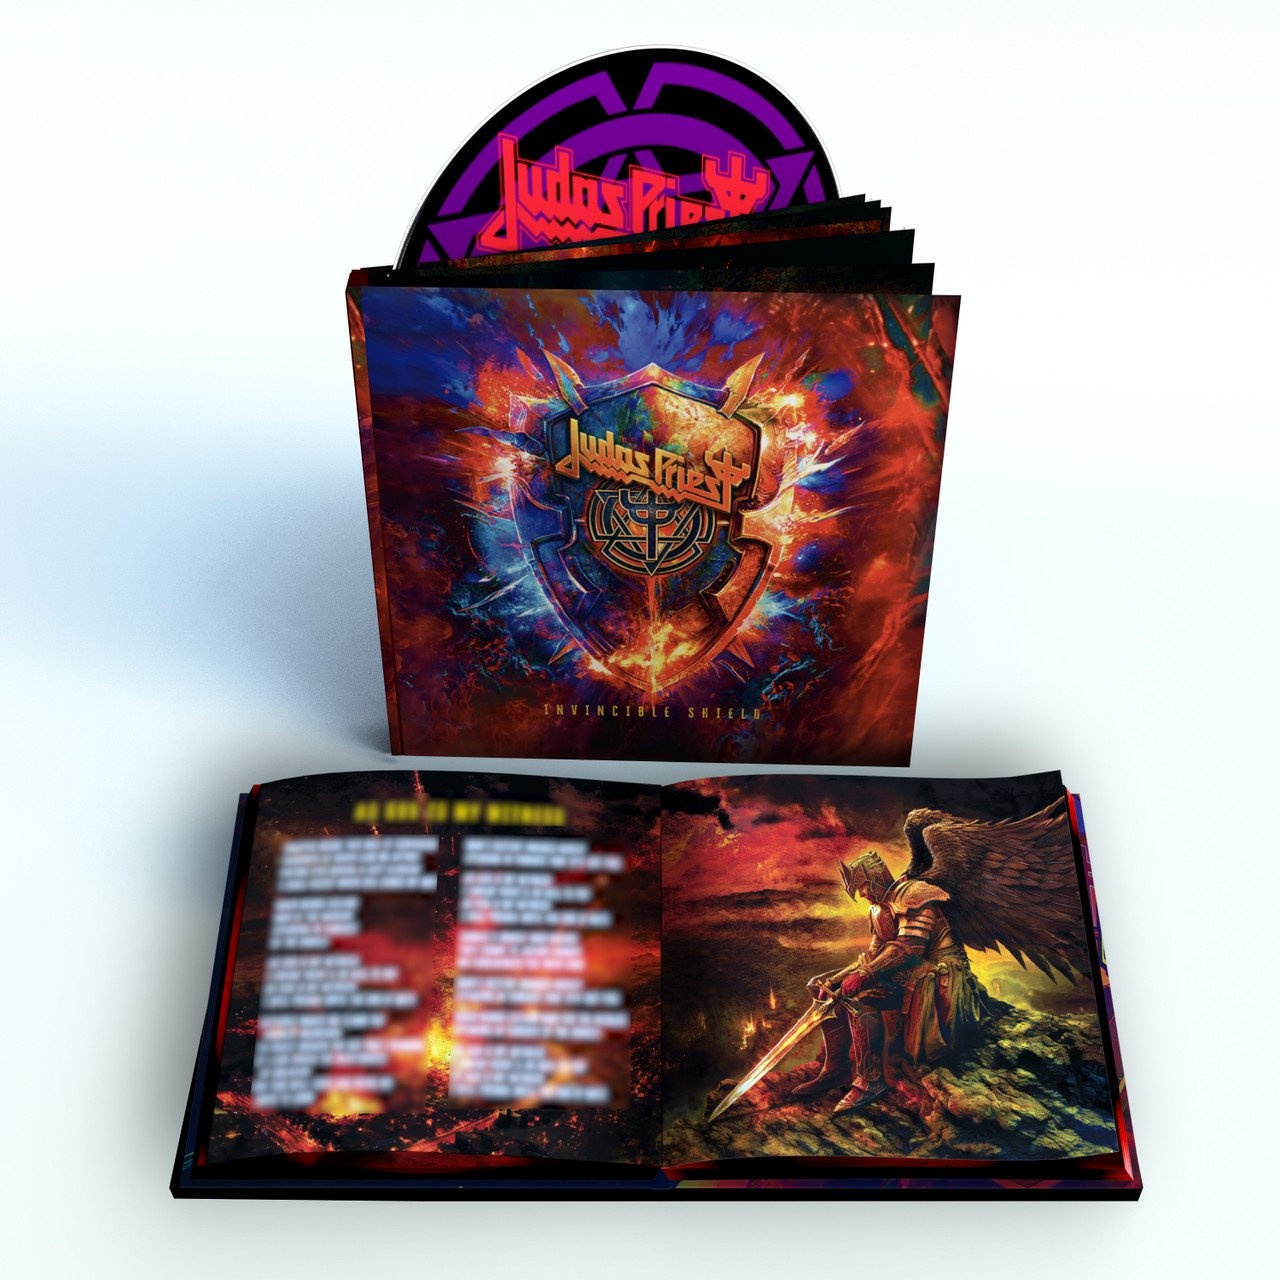 Invincible shield judas priest альбомы. Judas Priest - Invincible Shield (Deluxe Edition) (2024). Judas Priest - Invincible Shield (2024) CD. Judas Priest - 08.03.2024 - "Invincible Shield". Judas Priest Invisible Shield распаковка.